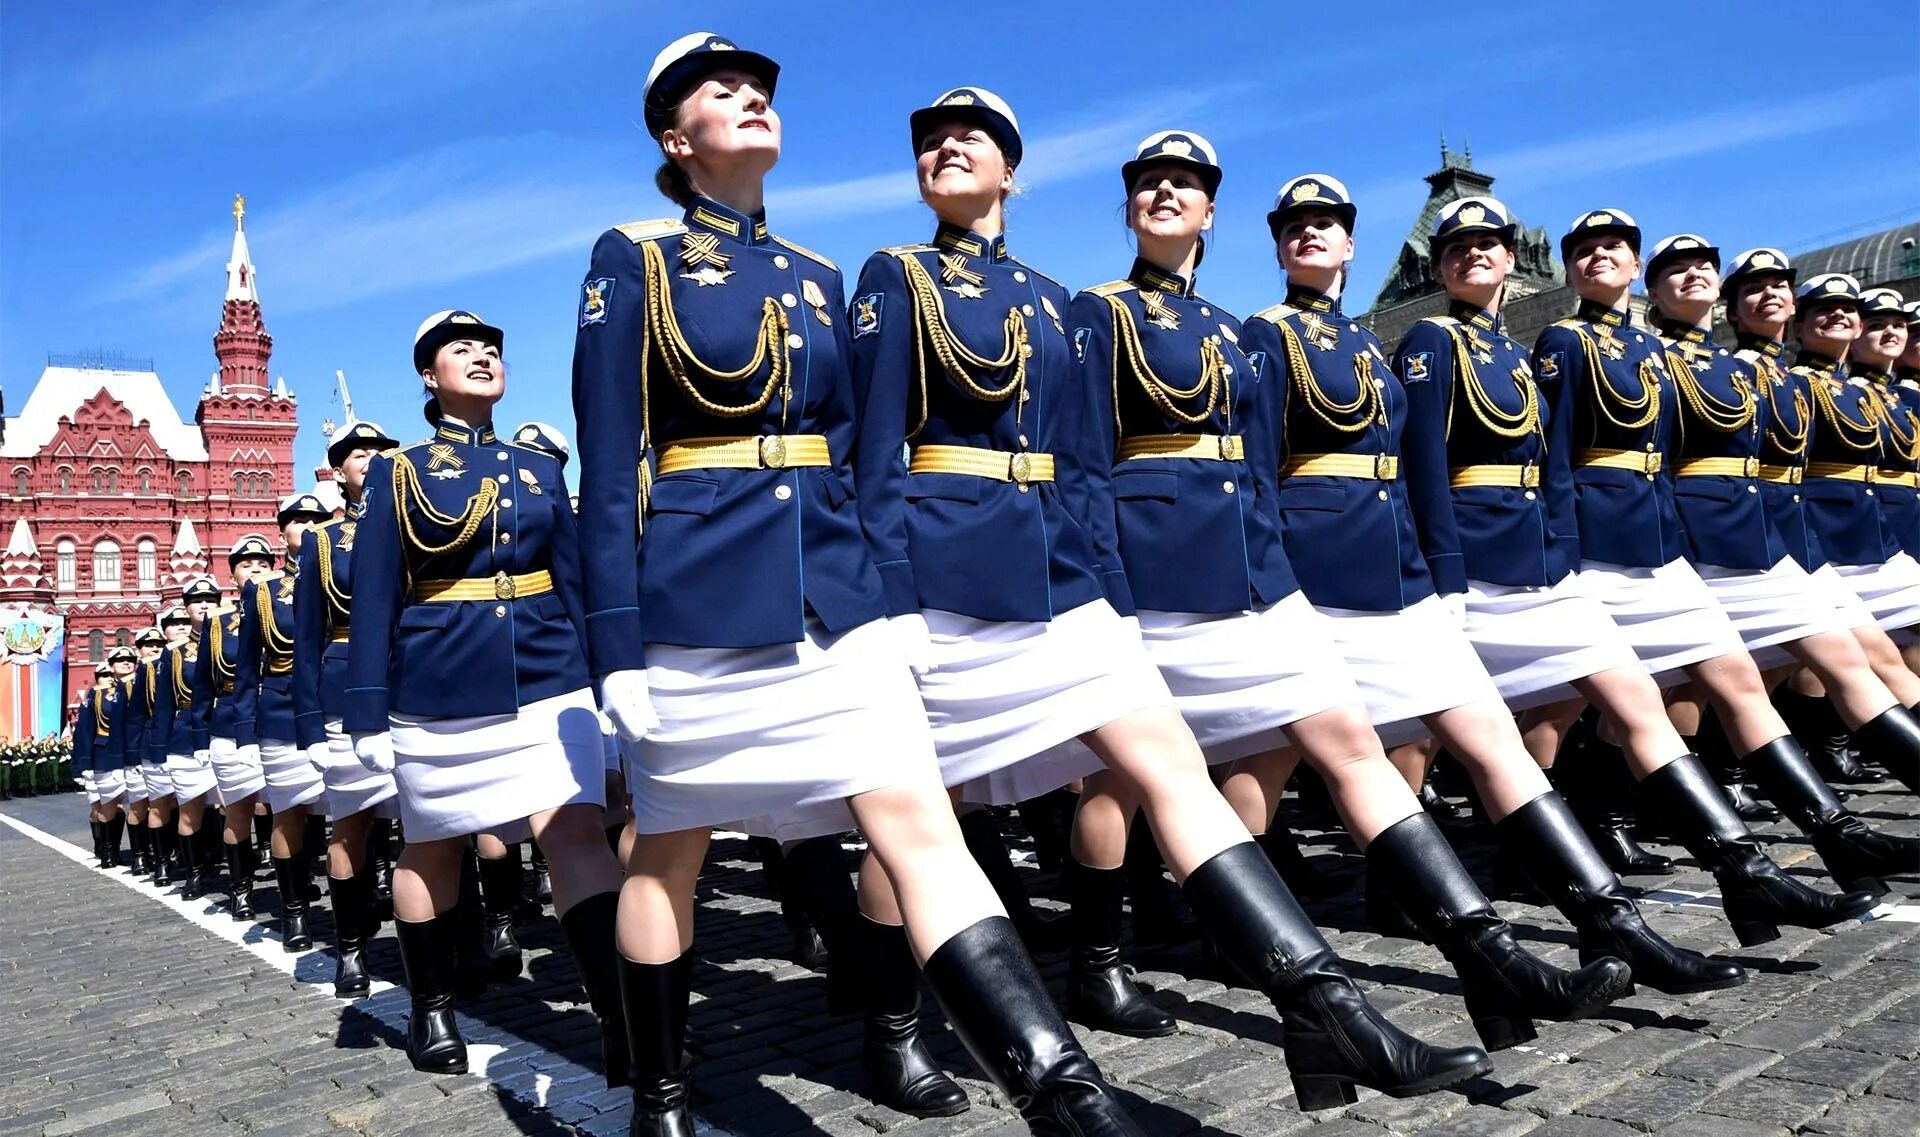 Женская парадная Военная форма. Девушки на параде. Девушки военные на параде. Парадная форма женщин военнослужащих.